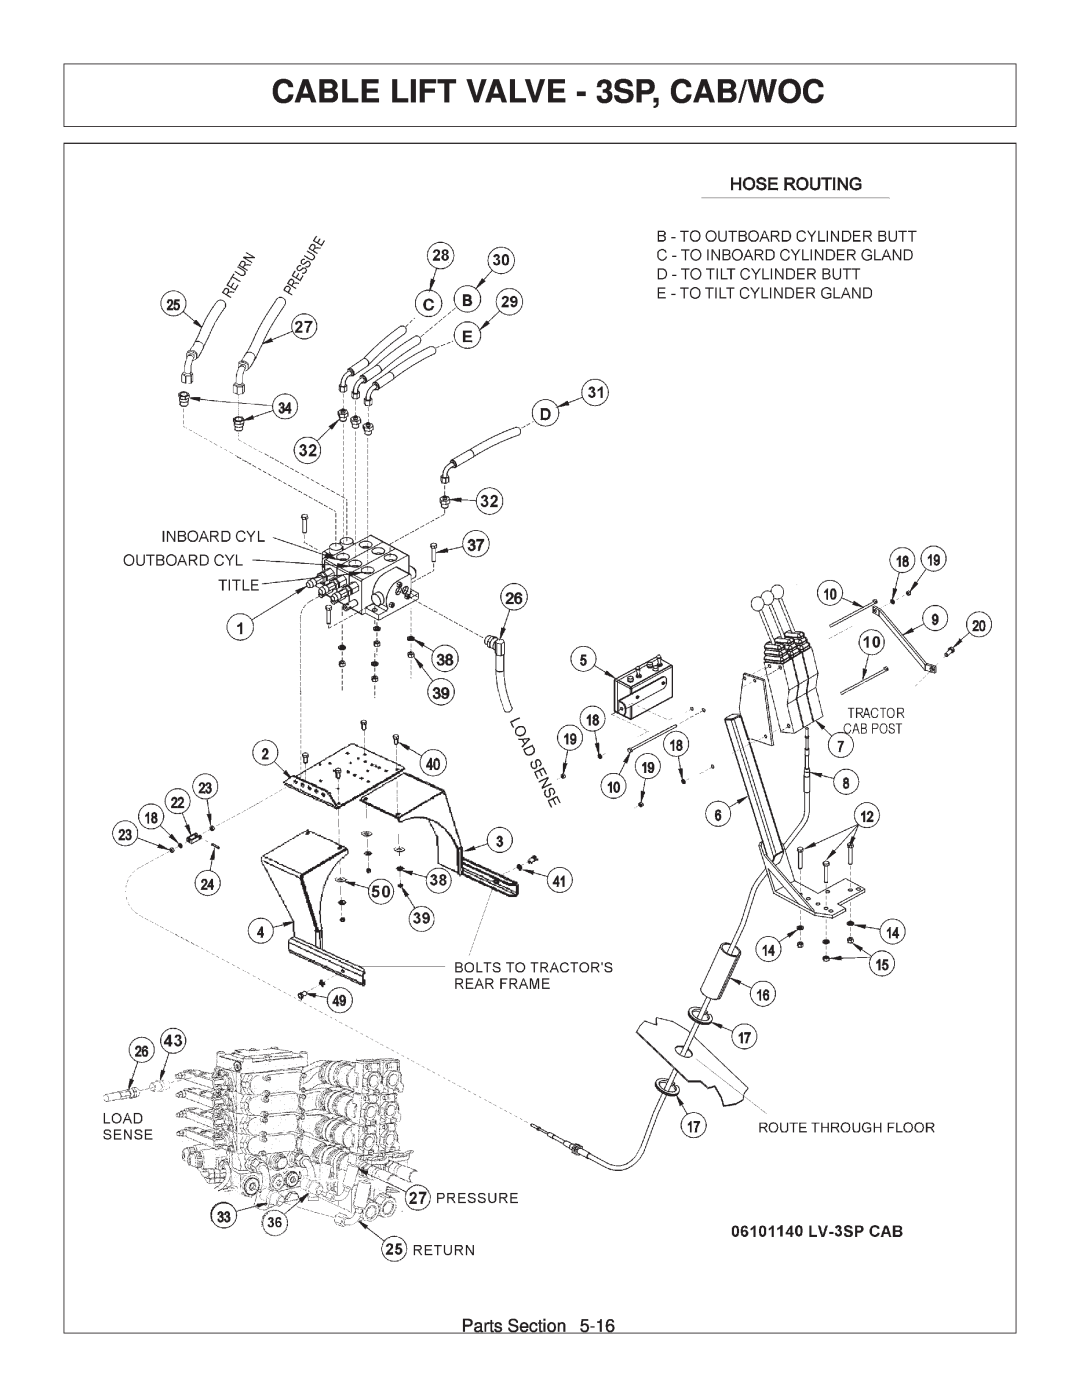 Tiger Products Co., Ltd 6020009 manual CABLE LIFT VALVE - 3SP, CAB/WOC, Parts Section 